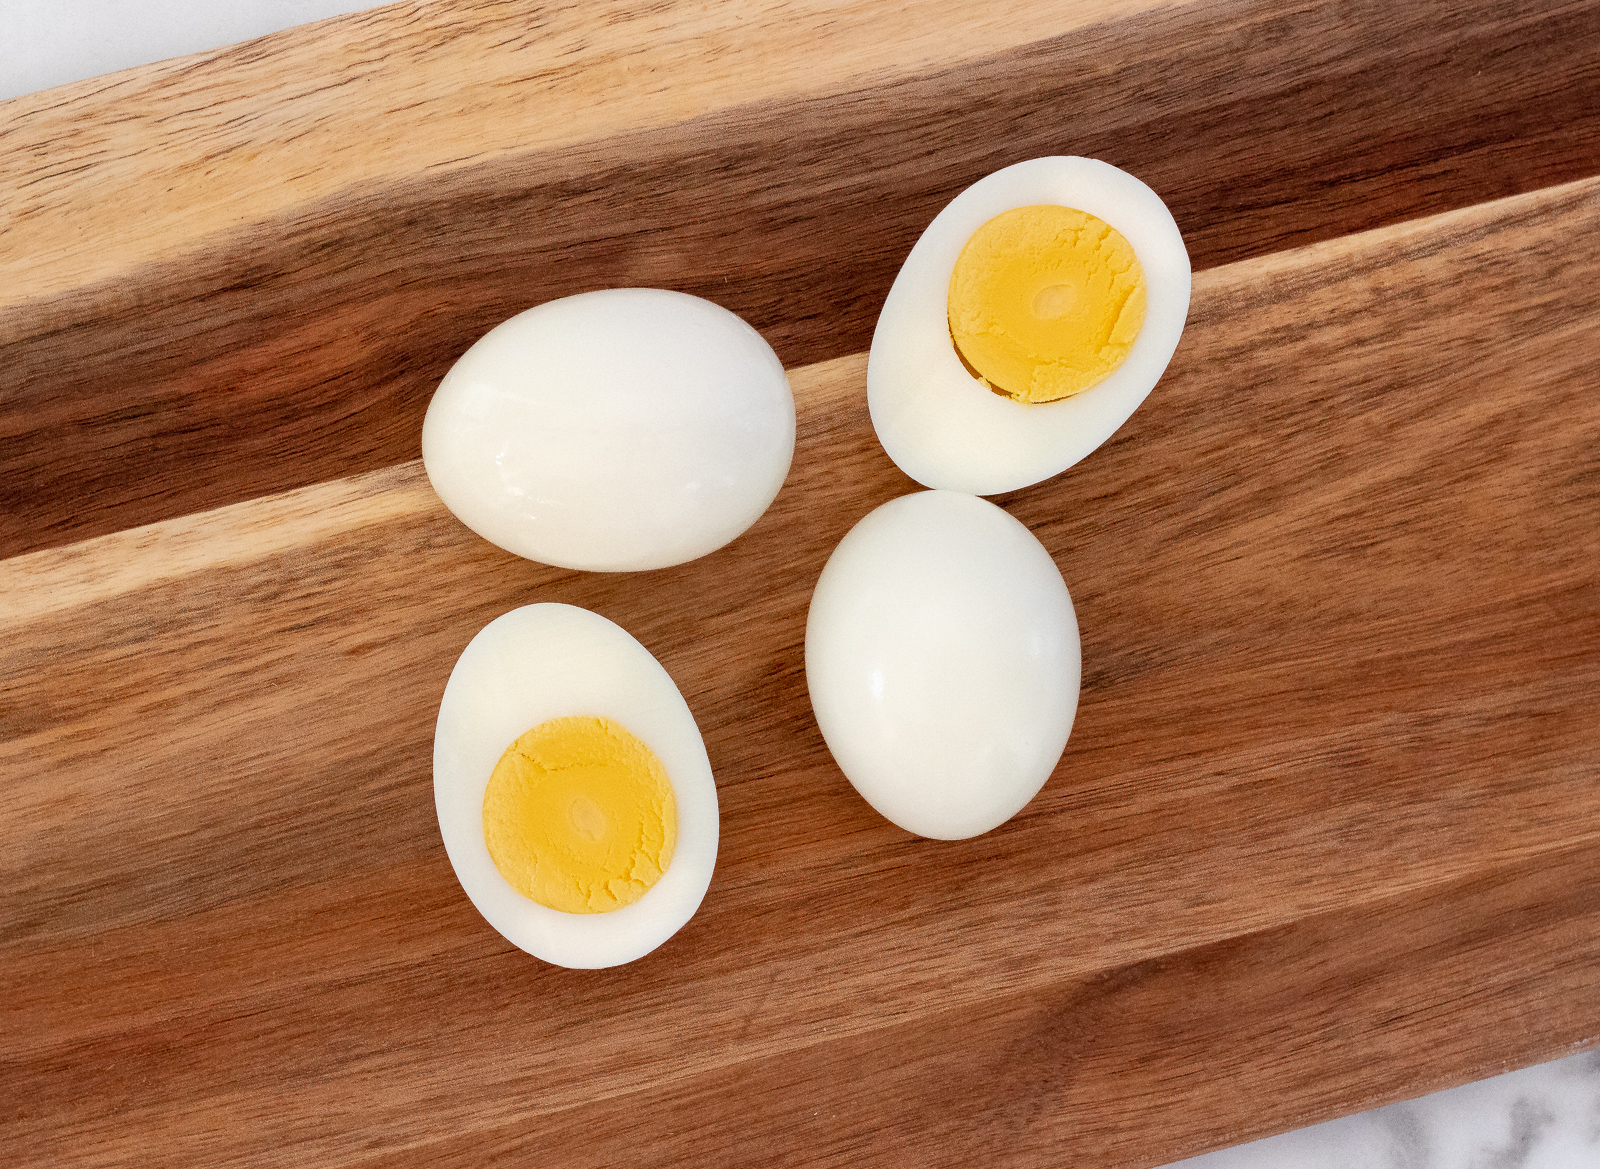 How to peel hard boiled eggs